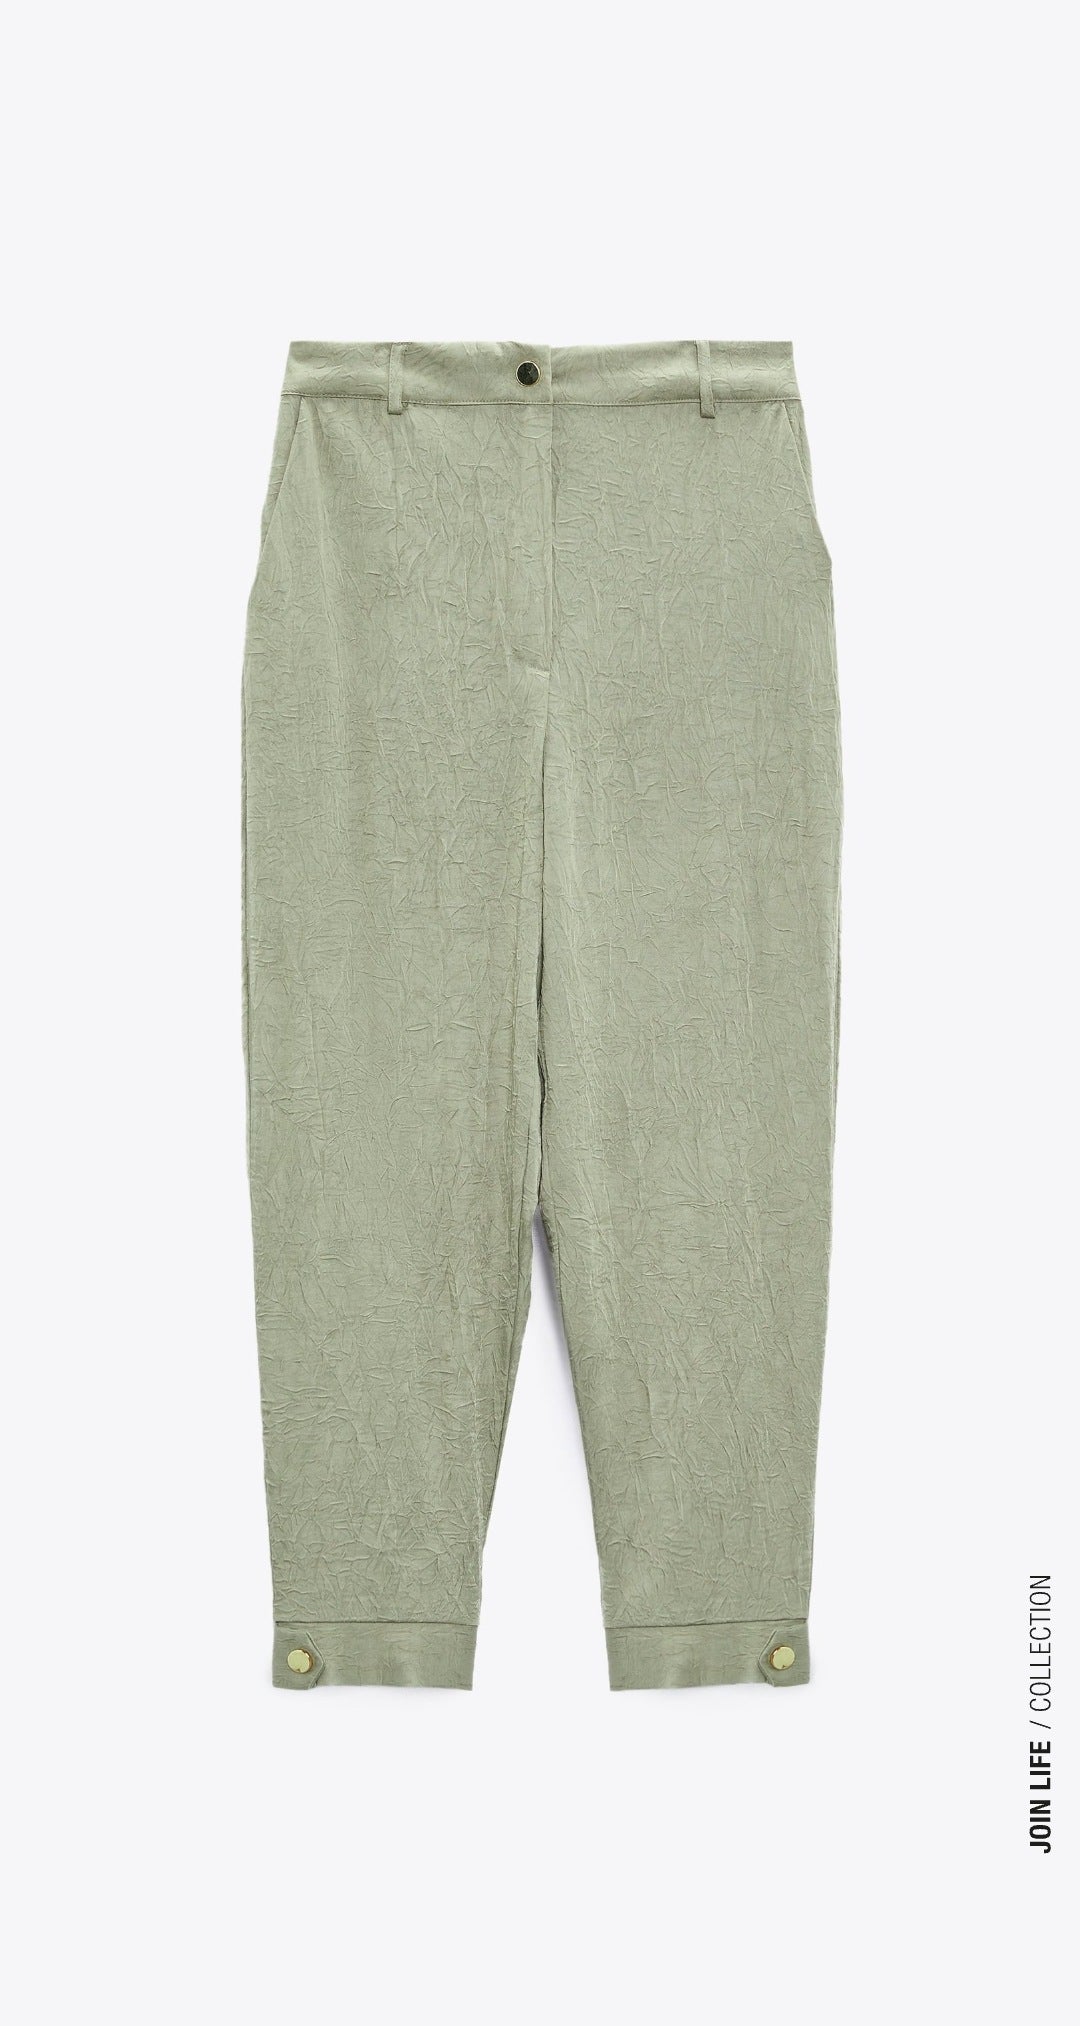 New Zara Jogger Waist Corduroy Pants S Khaki 2740/401 jeans jogging trouser  | eBay